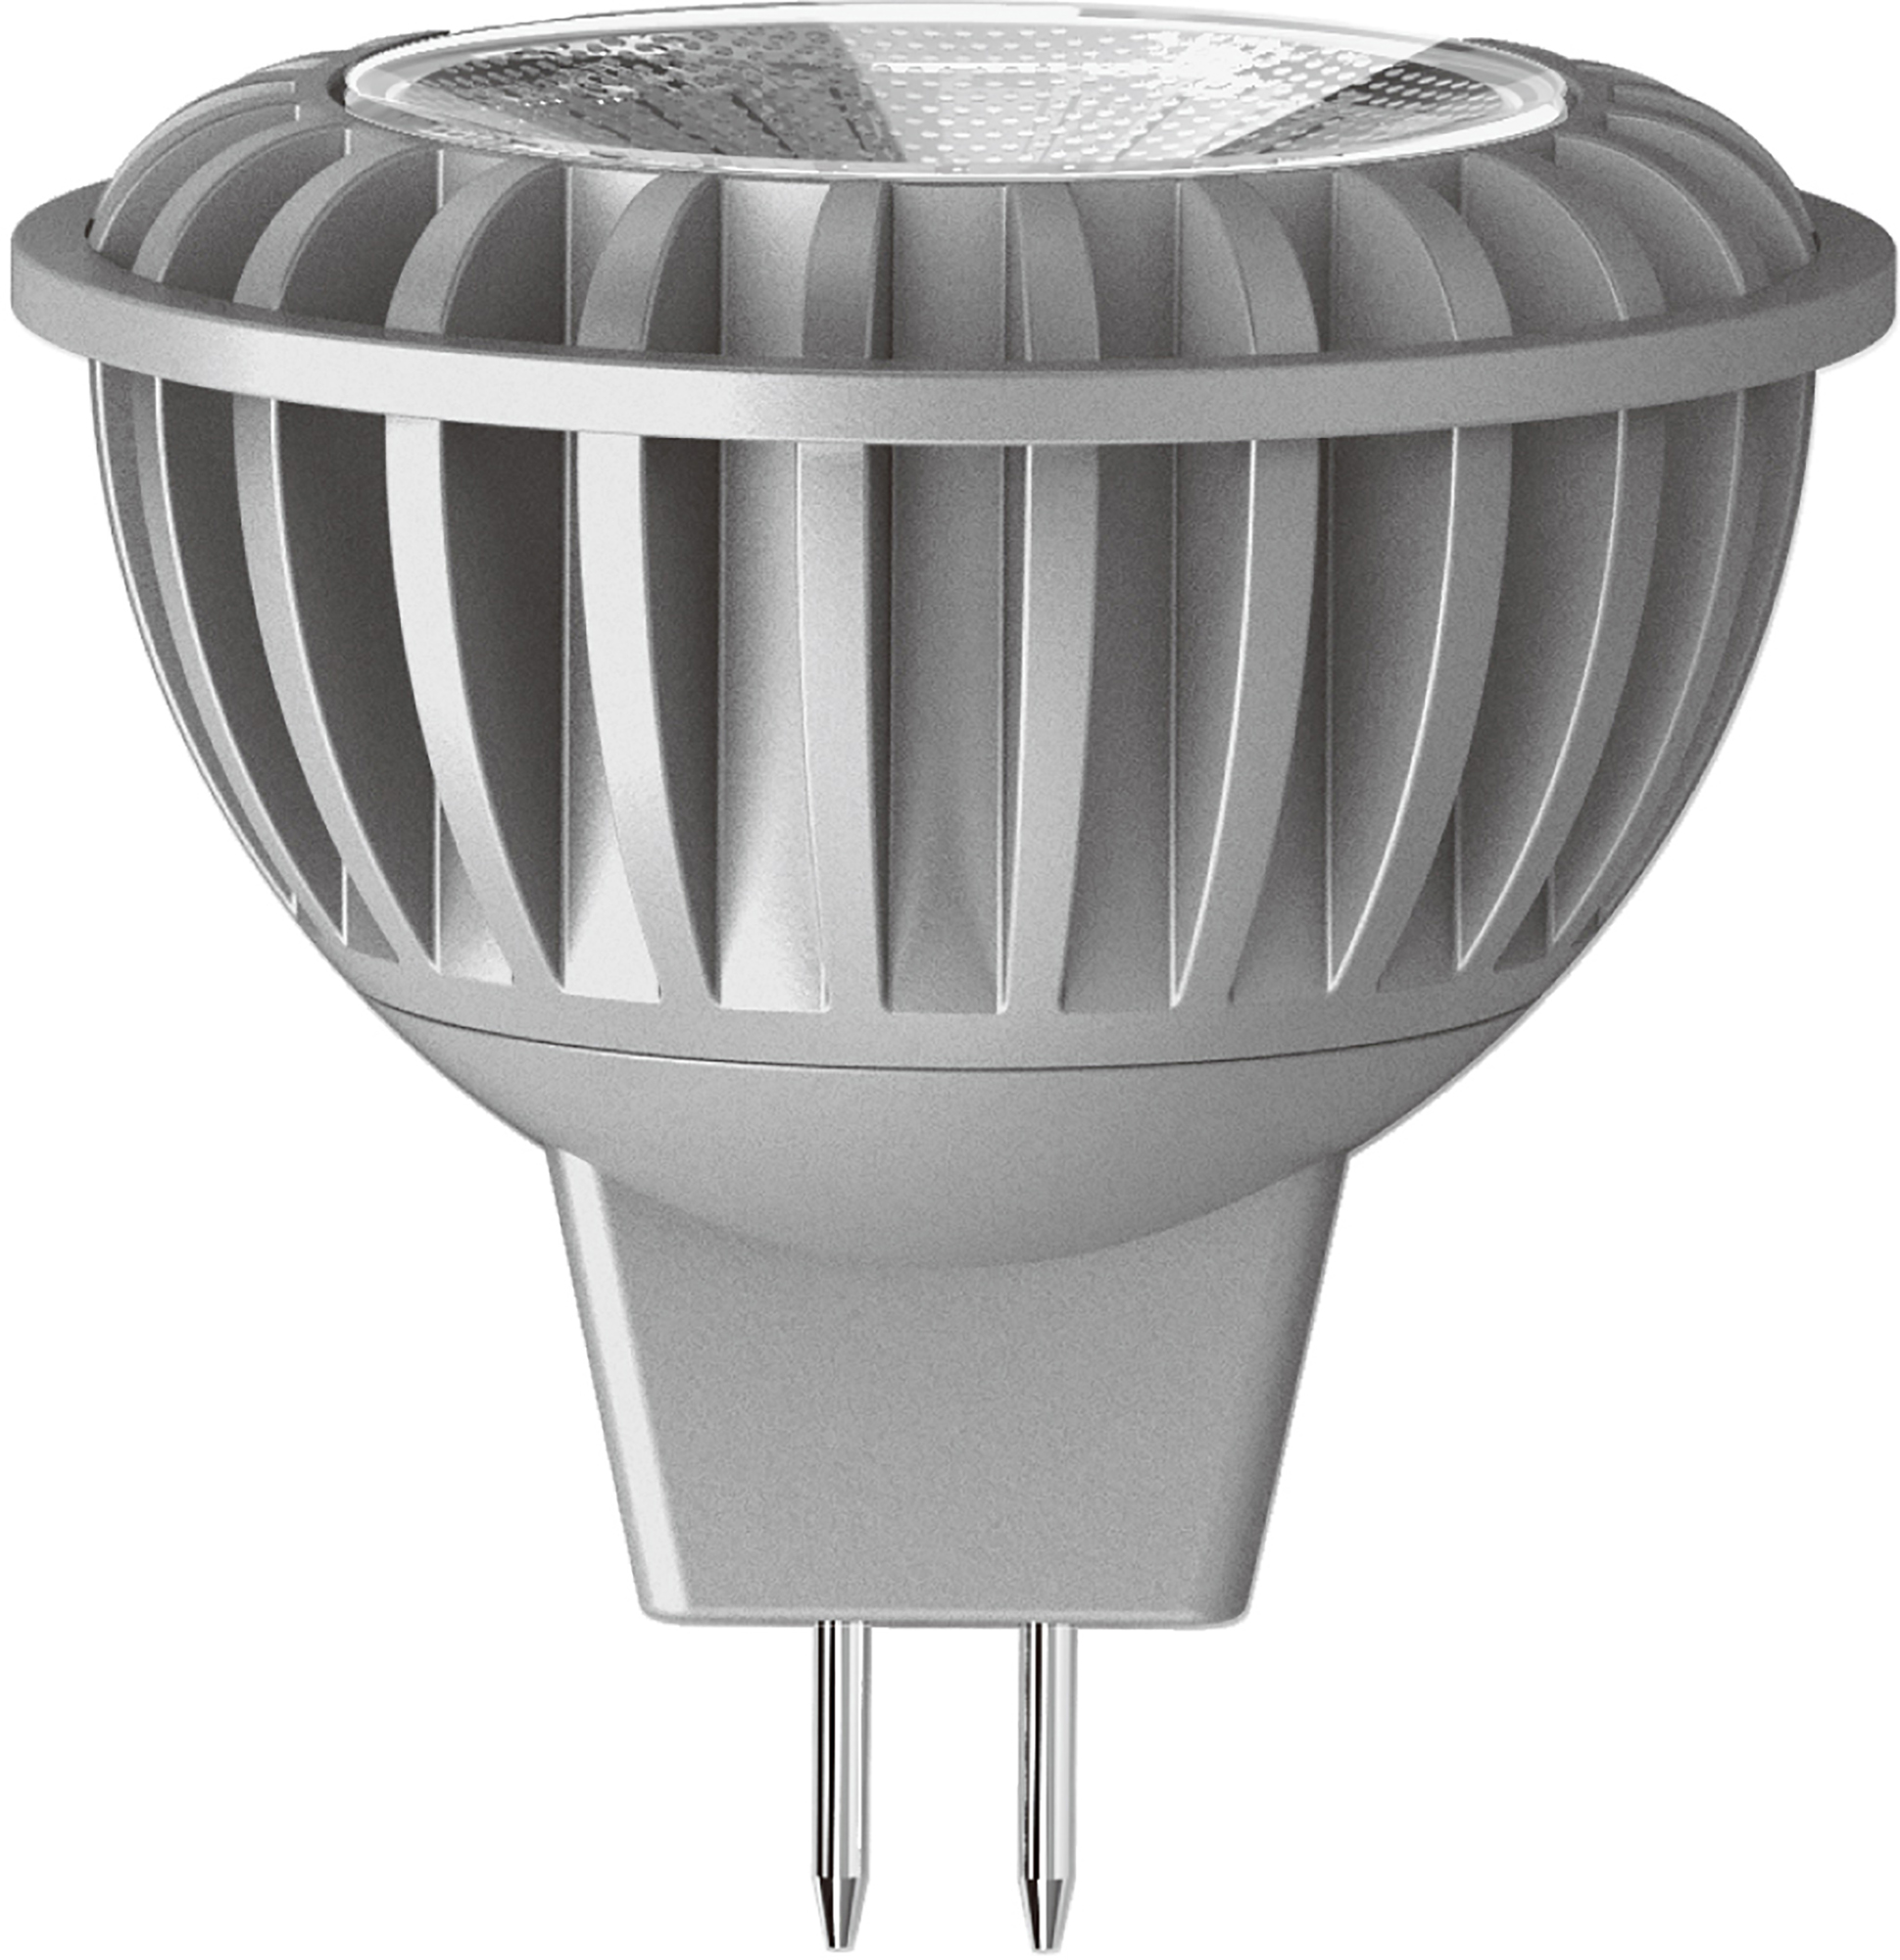 Truevision LED Lamps Luxram Spot Lamps